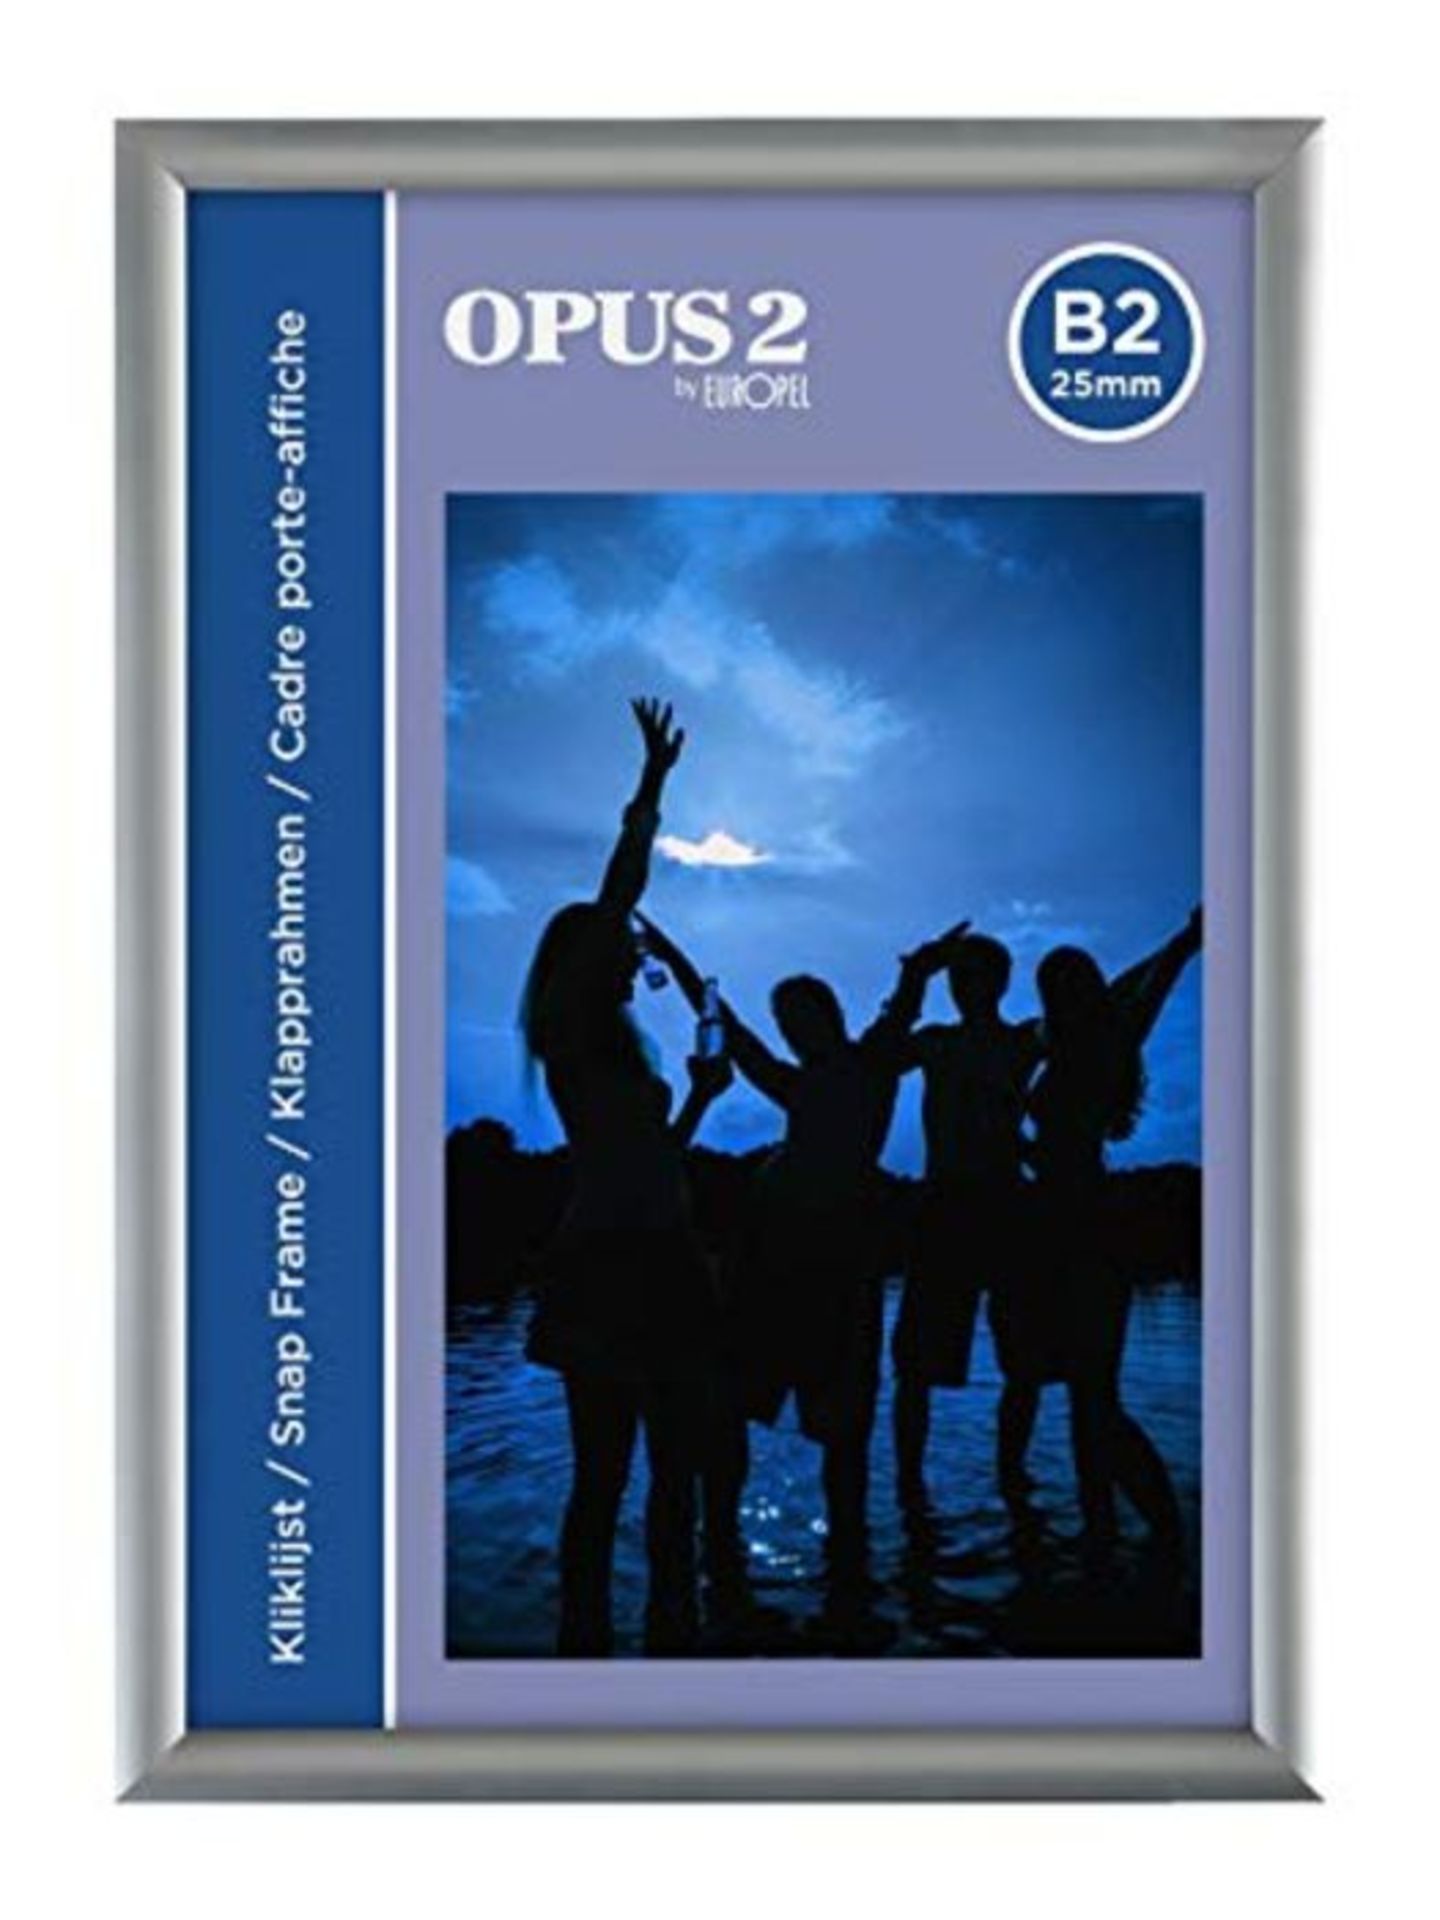 Opus 2 Snap Frame B2 (50 x 70 cm), 25 mm Aluminium Anodised Construction and Anti-Glar